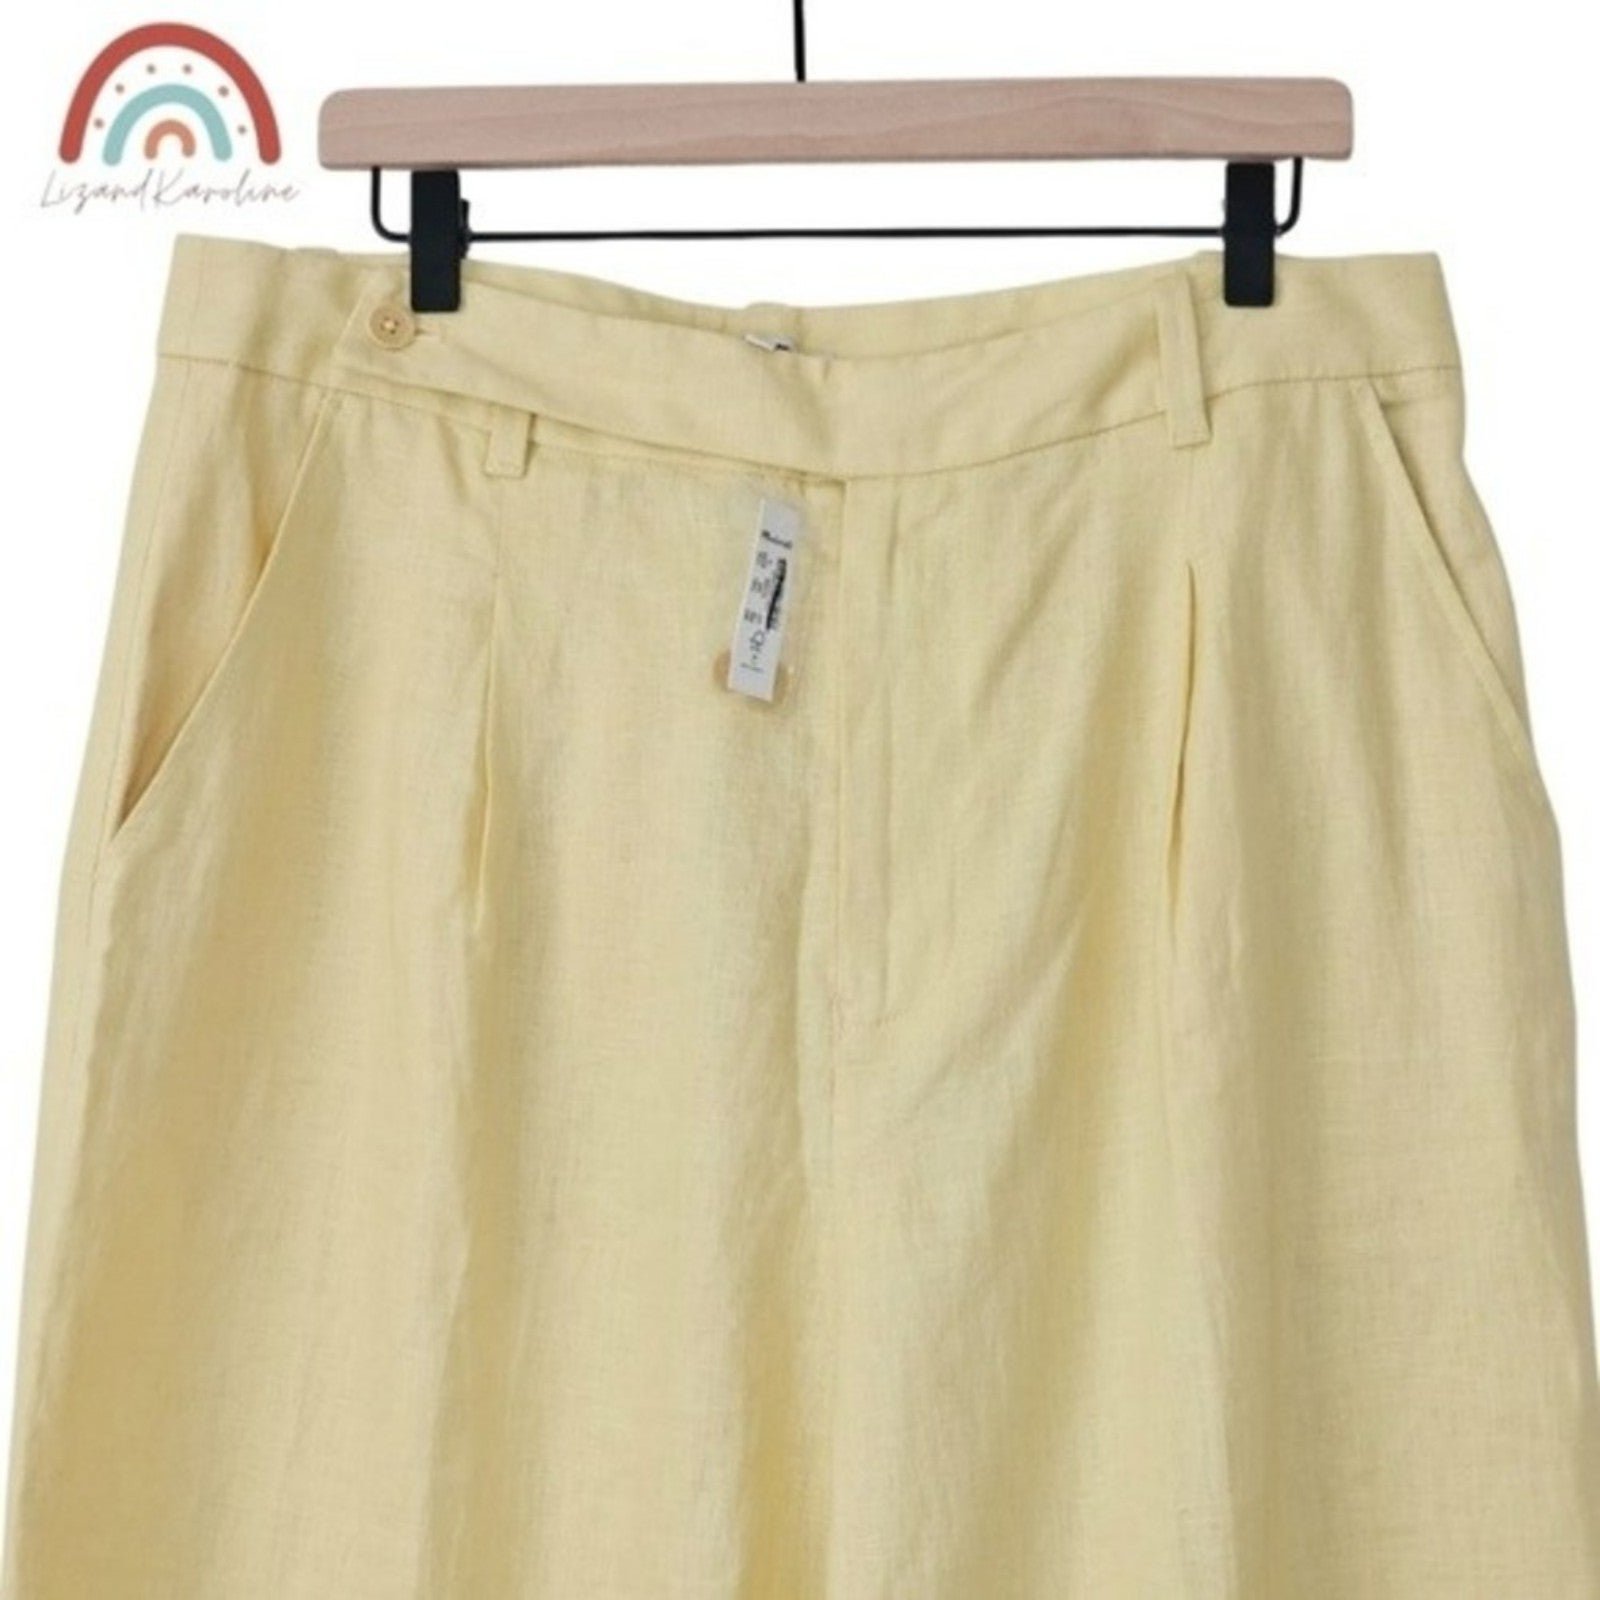 Custom New! Madewell The Harlow Wide Leg Pant 100% Linen High Waist Trouser Pants 14 oEjwiIVRA New Style